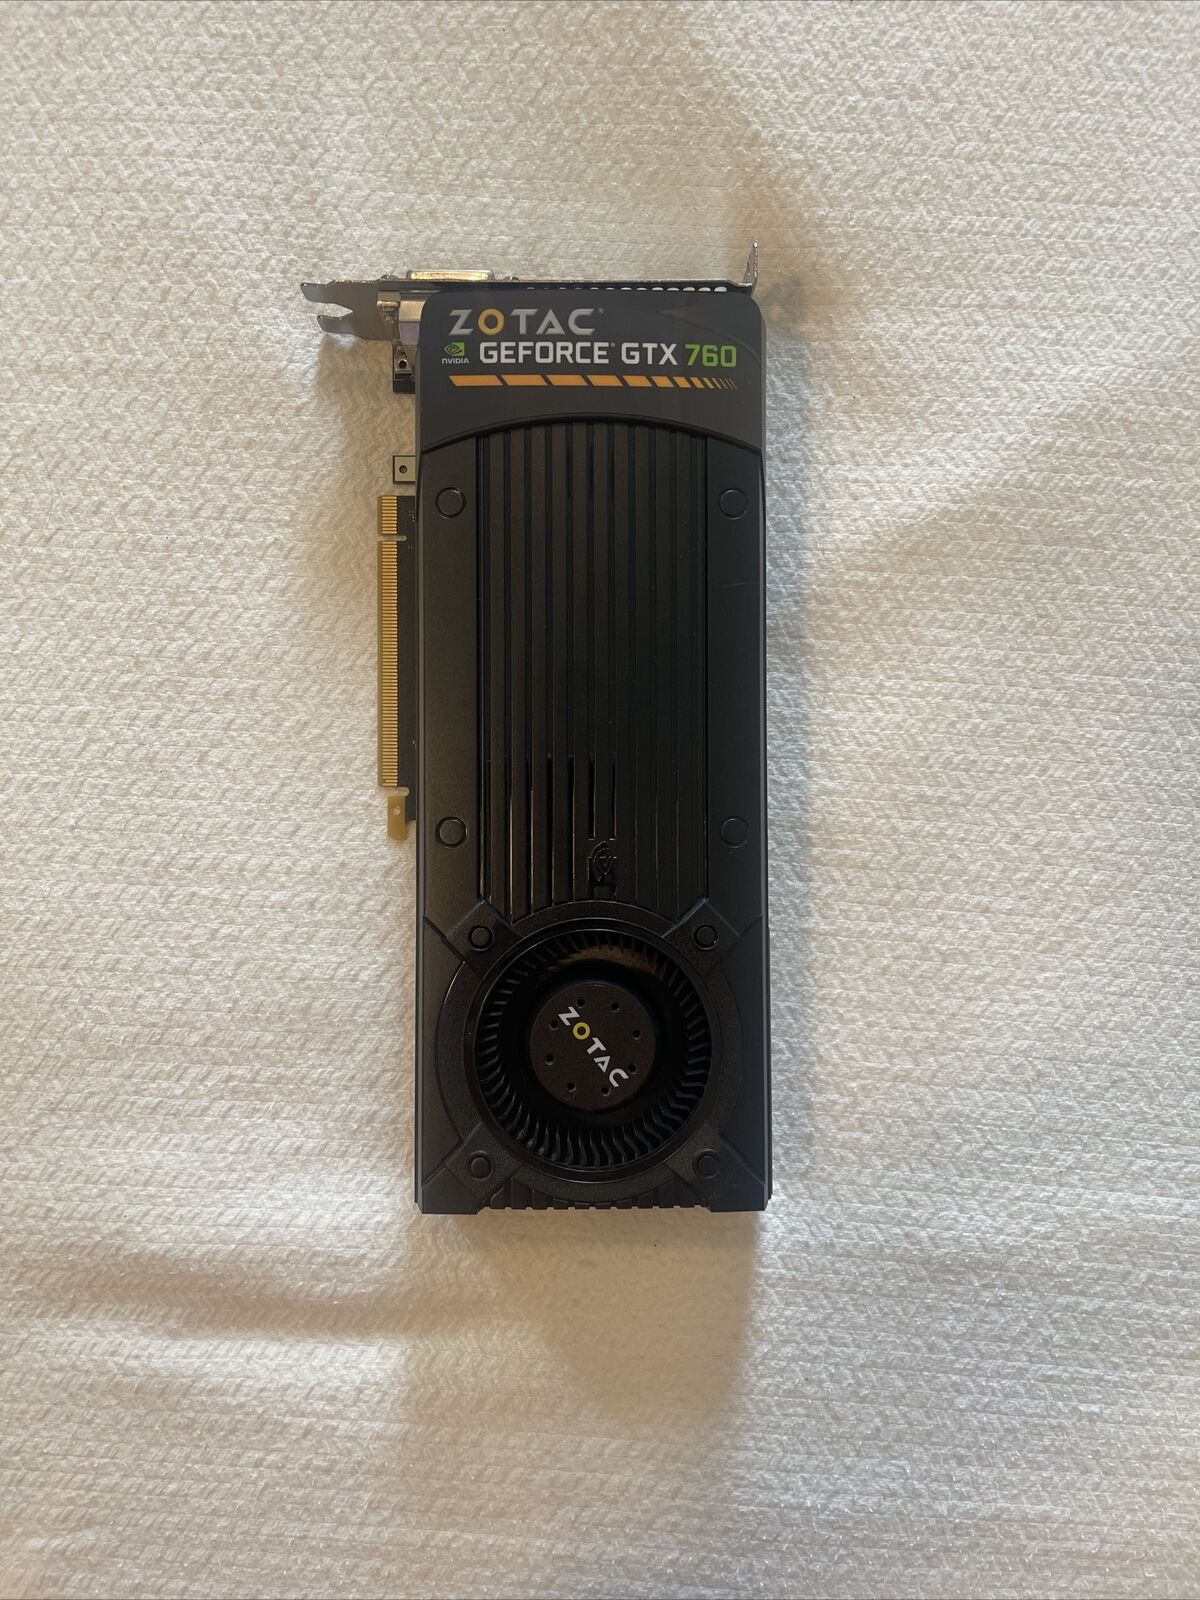 NVIDIA GeForce GTX 760 2GB GDDR5 PCI Express Graphics Card - Black